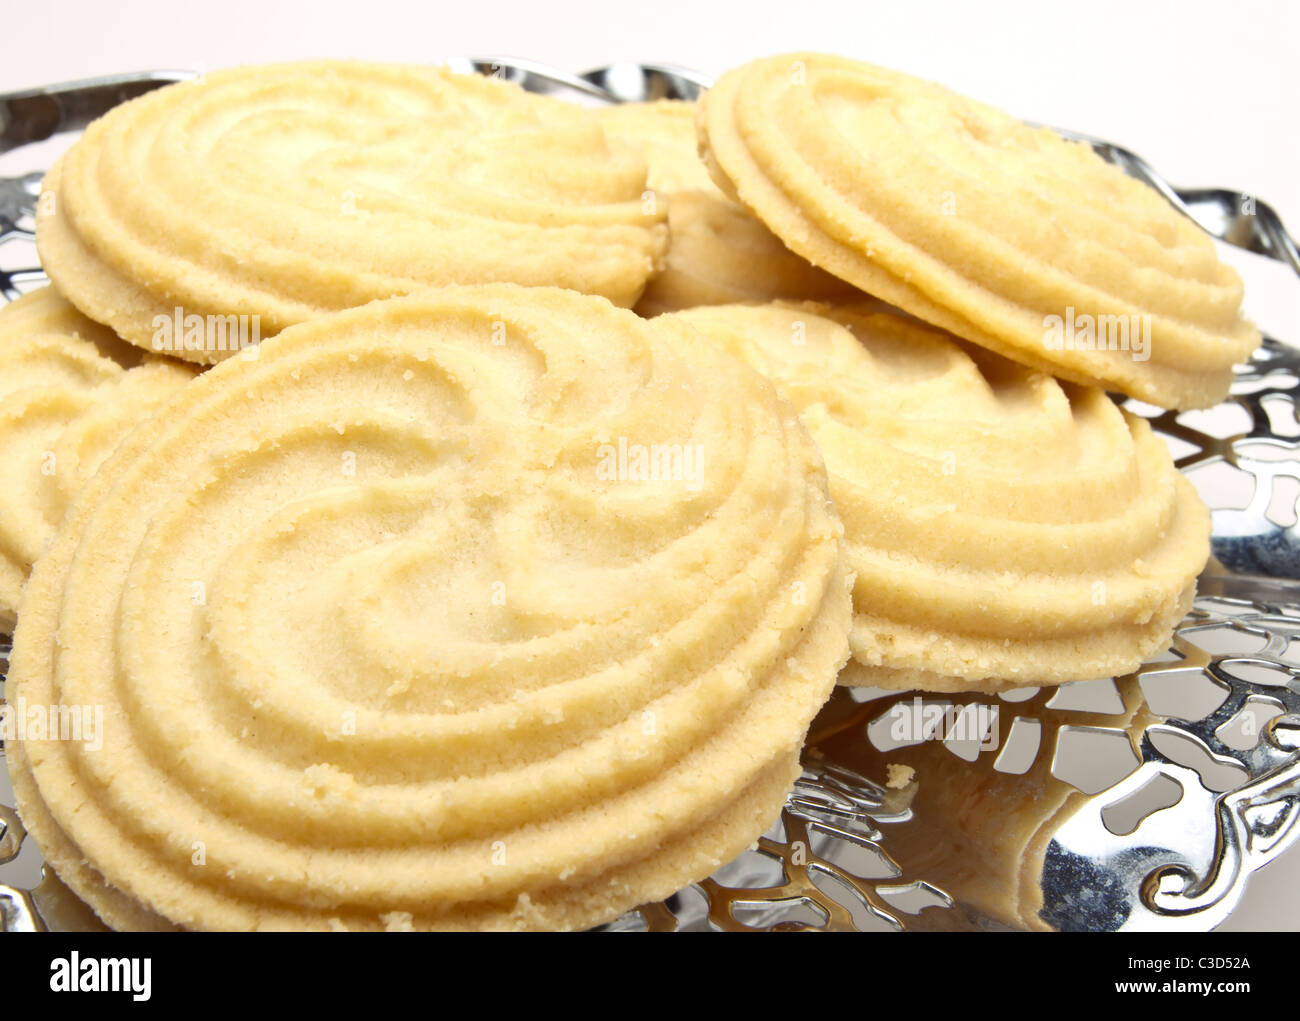 Cerca de swirl vienés galletas en metal plateado cake stand. Foto de stock